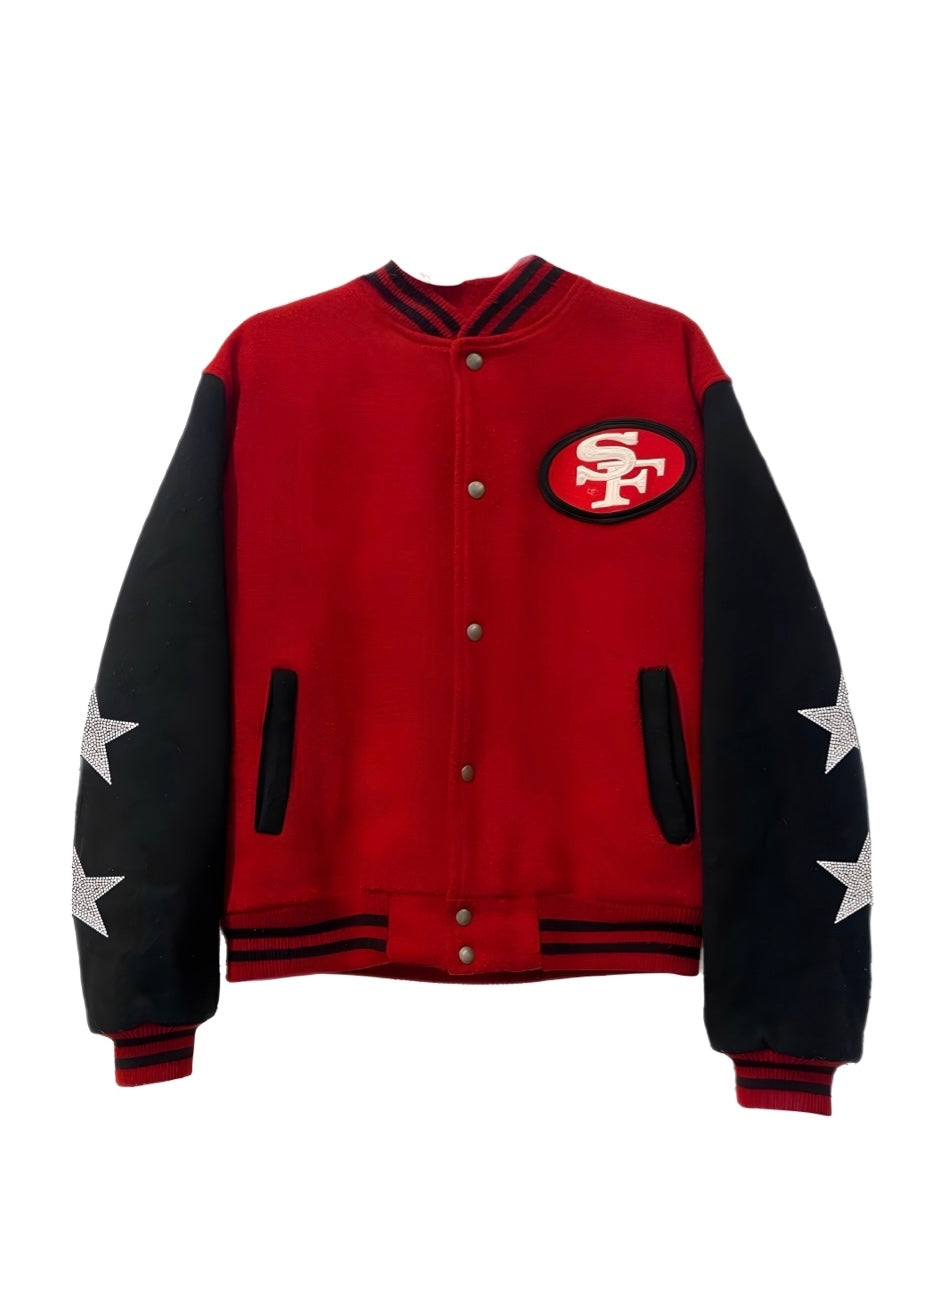 San Francisco 49ers, Football “Rare Find” One of a KIND Vintage  Bomber Jacket with Crystal Star Design